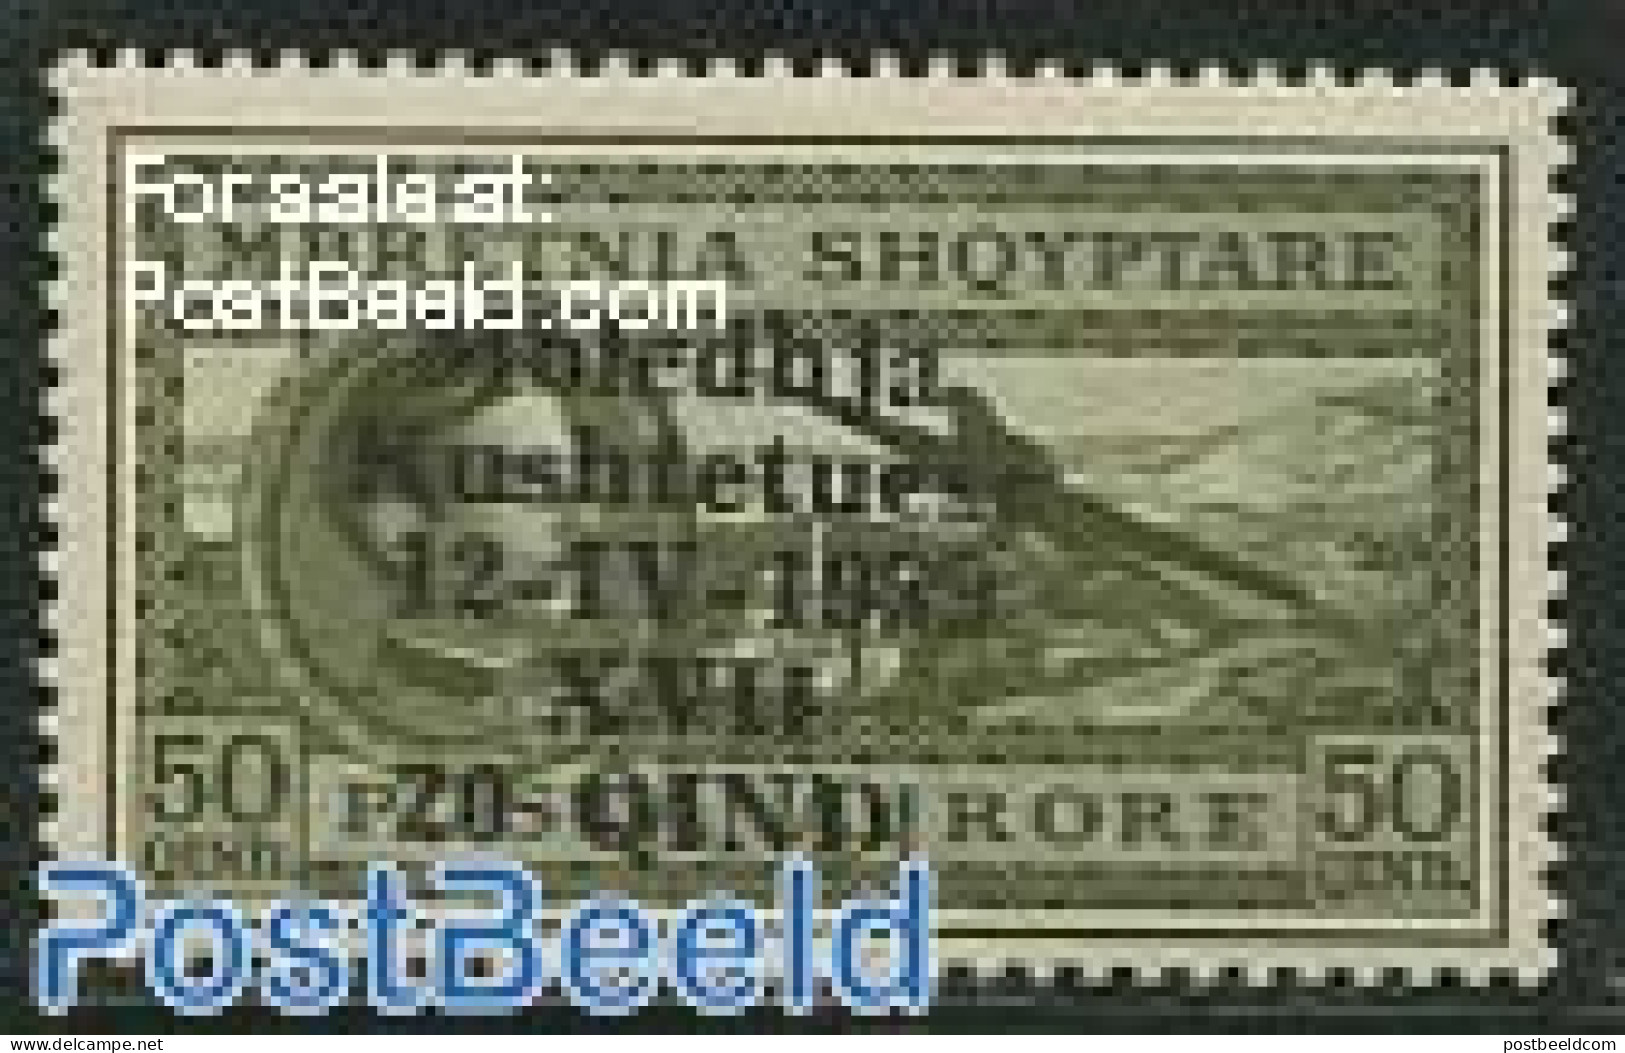 Albania 1939 50Q, Stamp Out Of Set, Unused (hinged) - Albanie